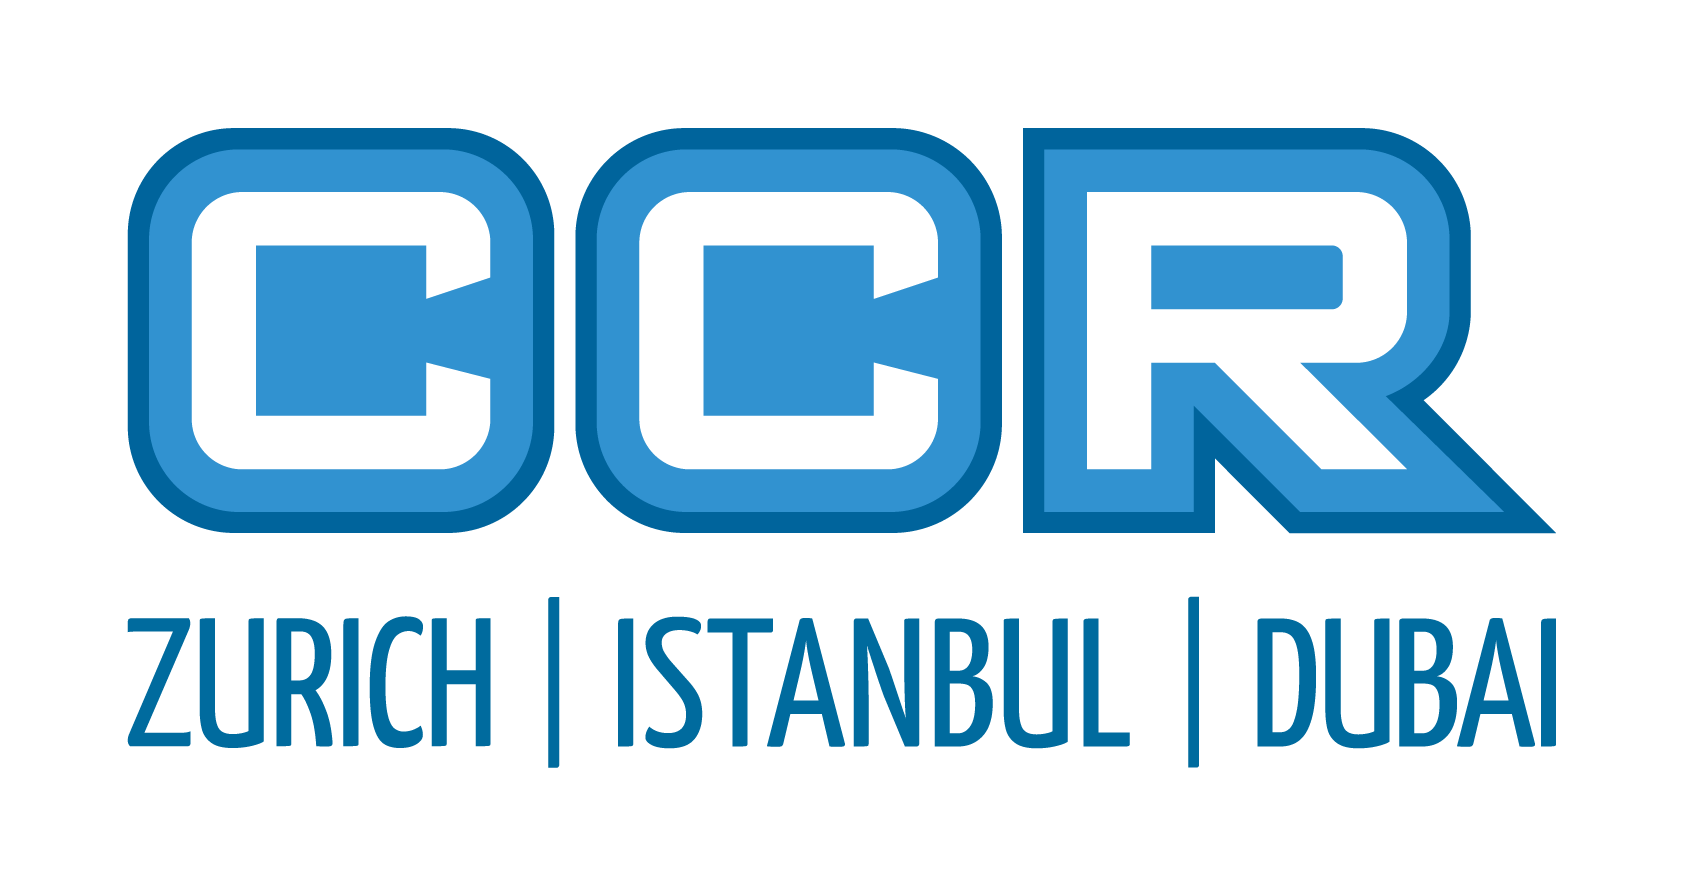 Ccr logo rgb